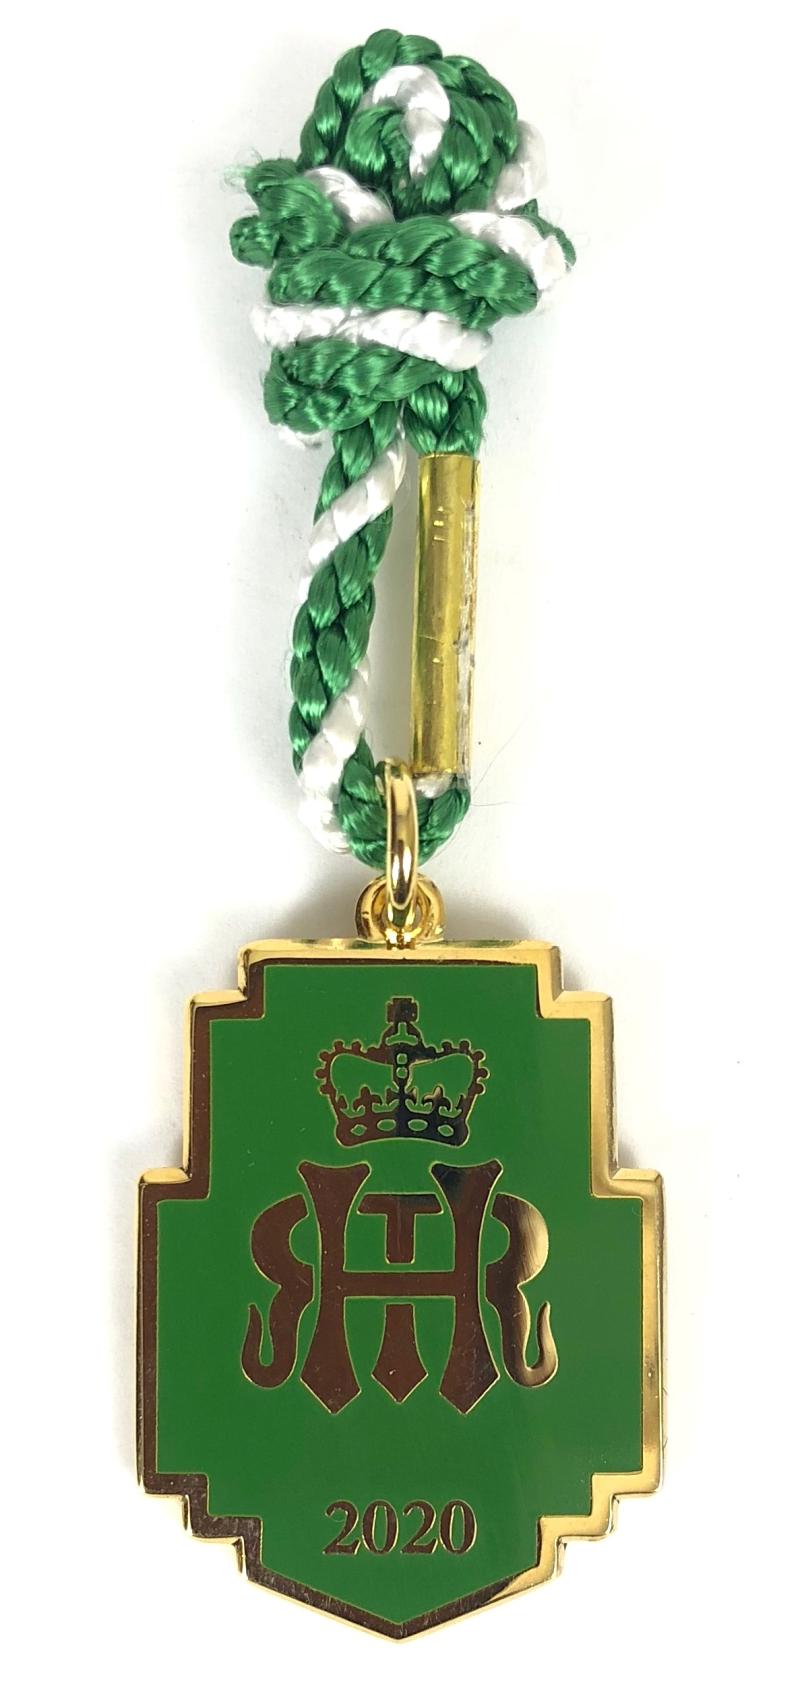 2020 Henley Royal Regatta stewards enclosure badge